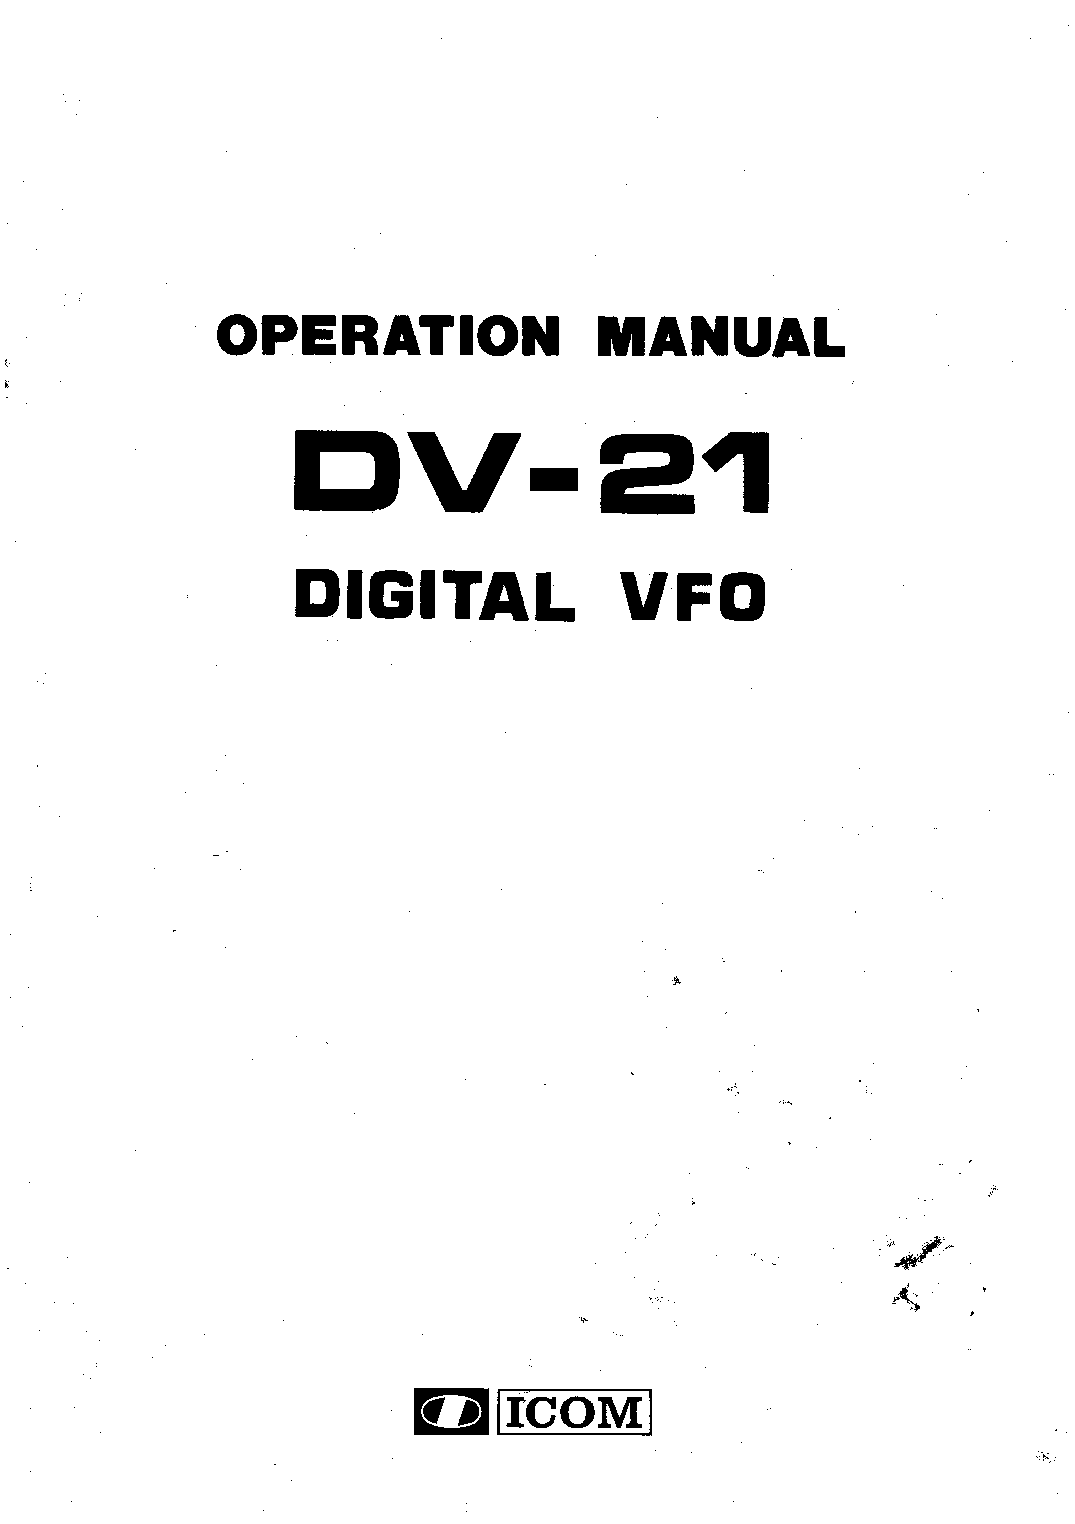 Icom DV-21 User Manual